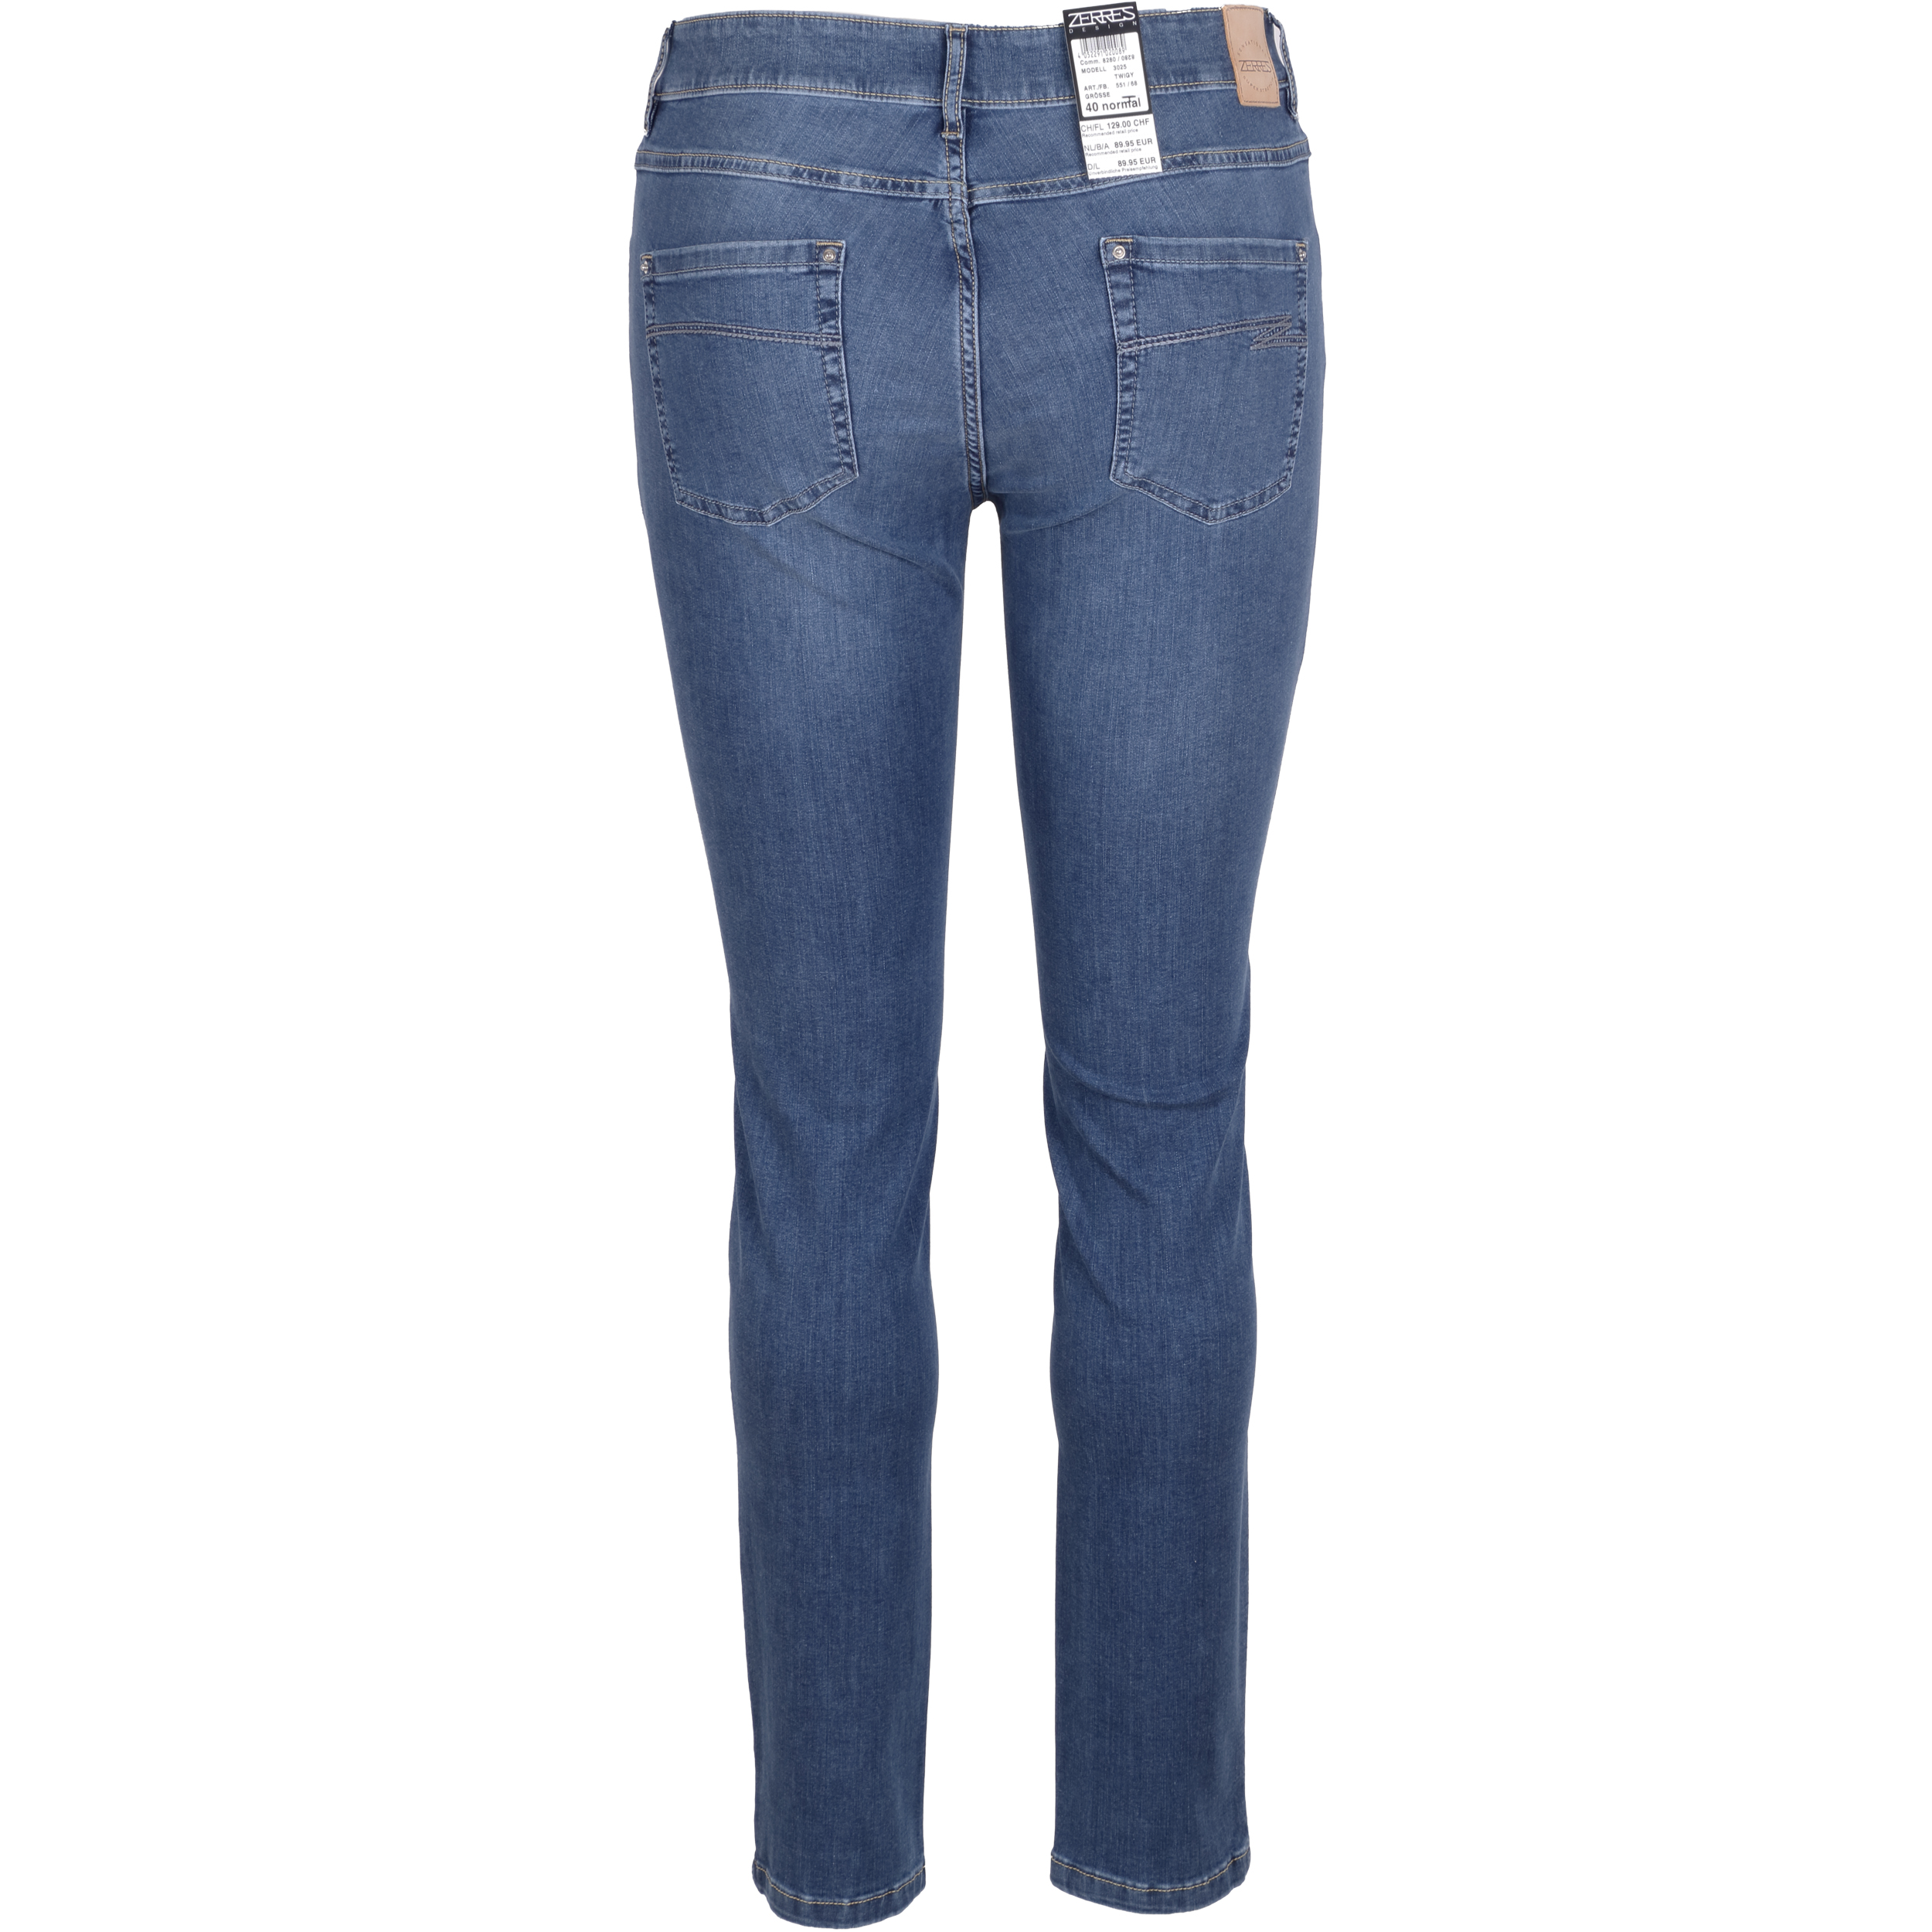 Zerres Damen Jeans Twigy Sensational  36 blau